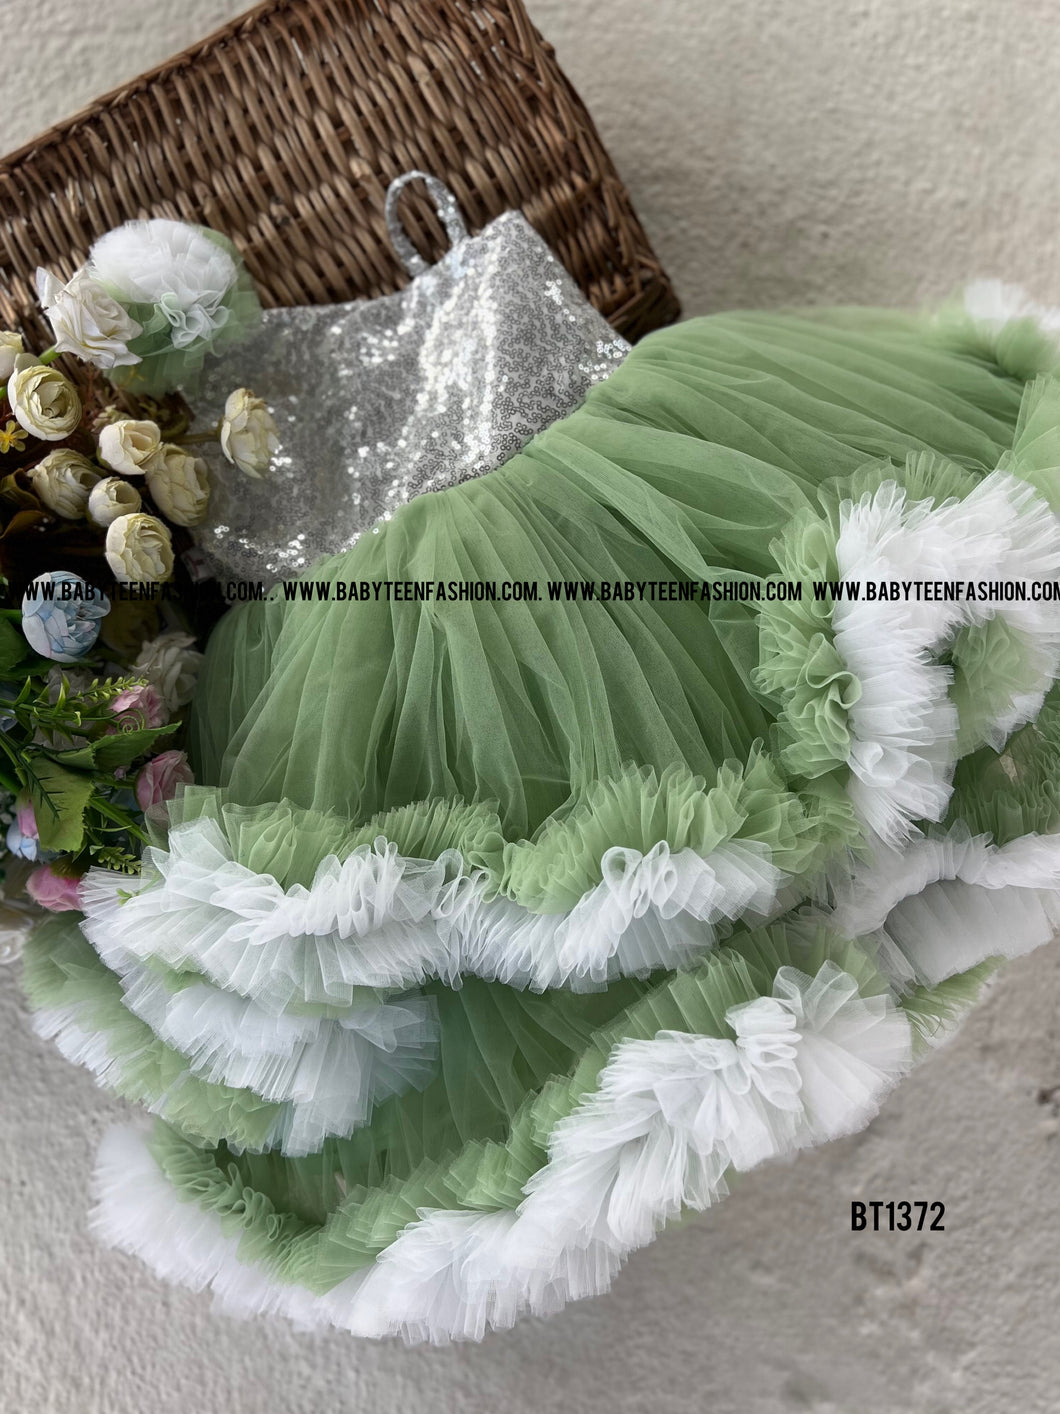 BT1372 Enchanted Garden Party Dress - Flourish in Unison!